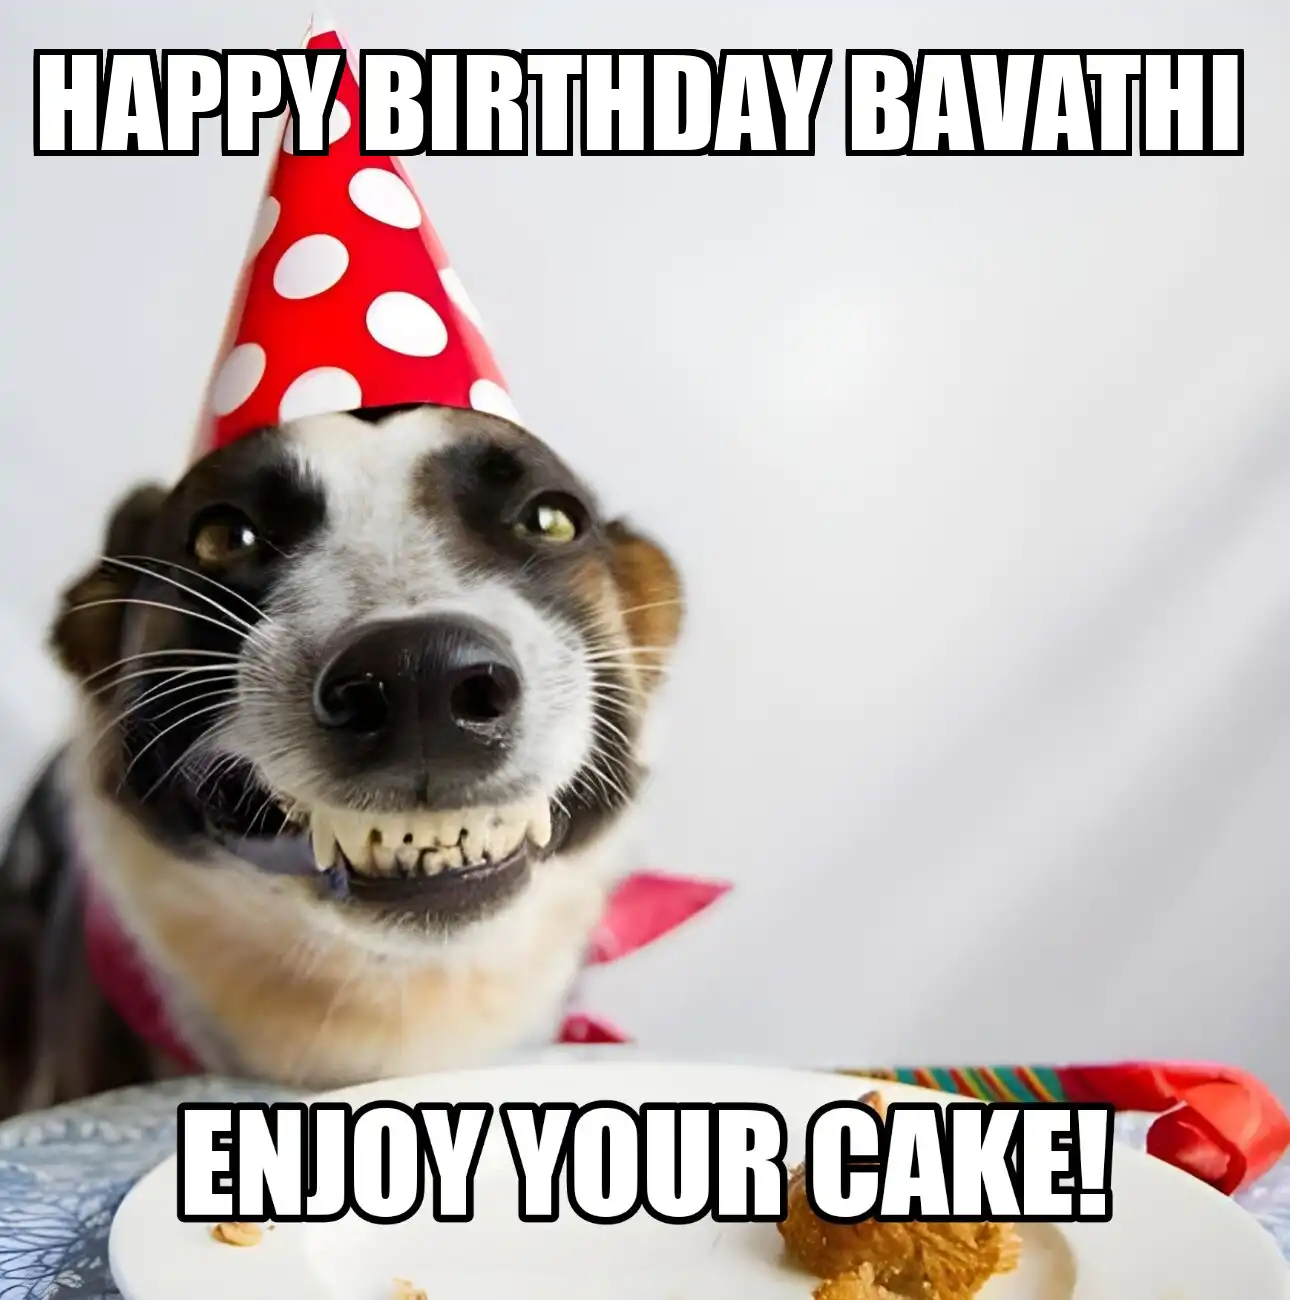 Happy Birthday Bavathi Enjoy Your Cake Dog Meme